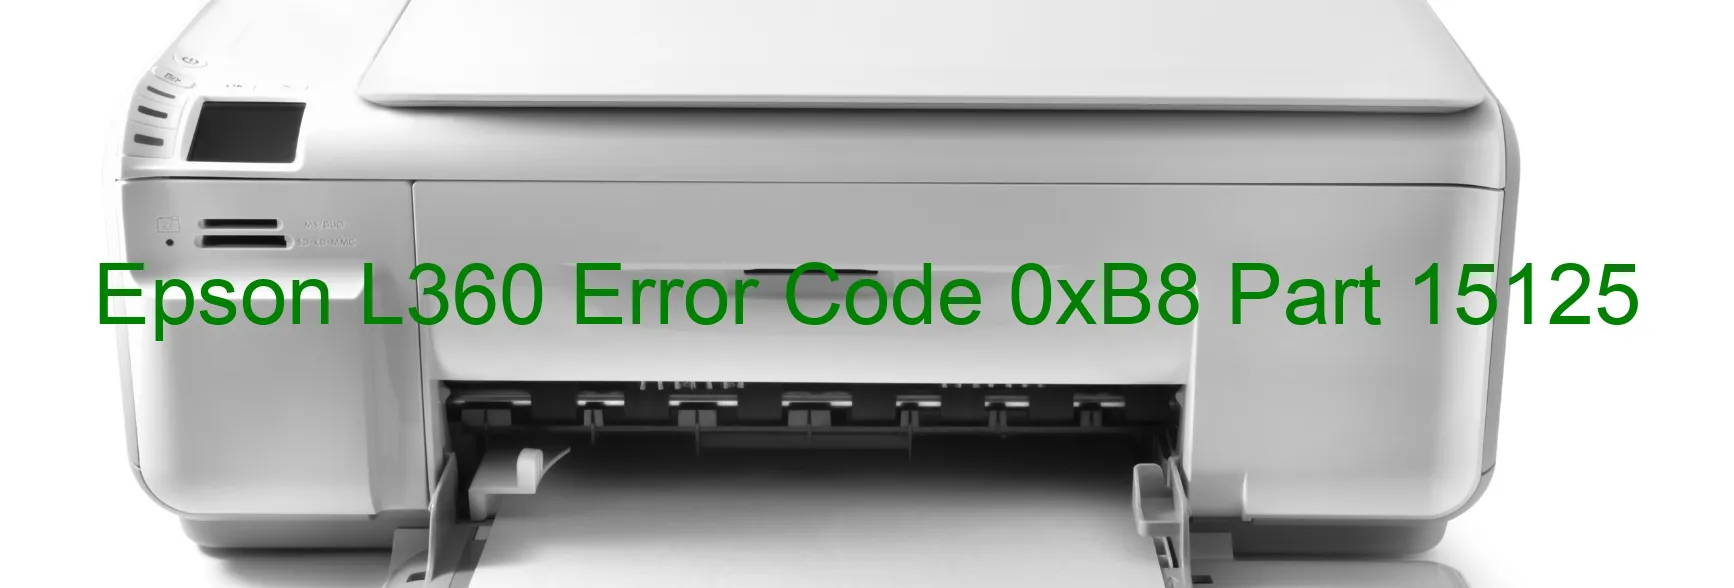 Epson L360 Error 0xB8